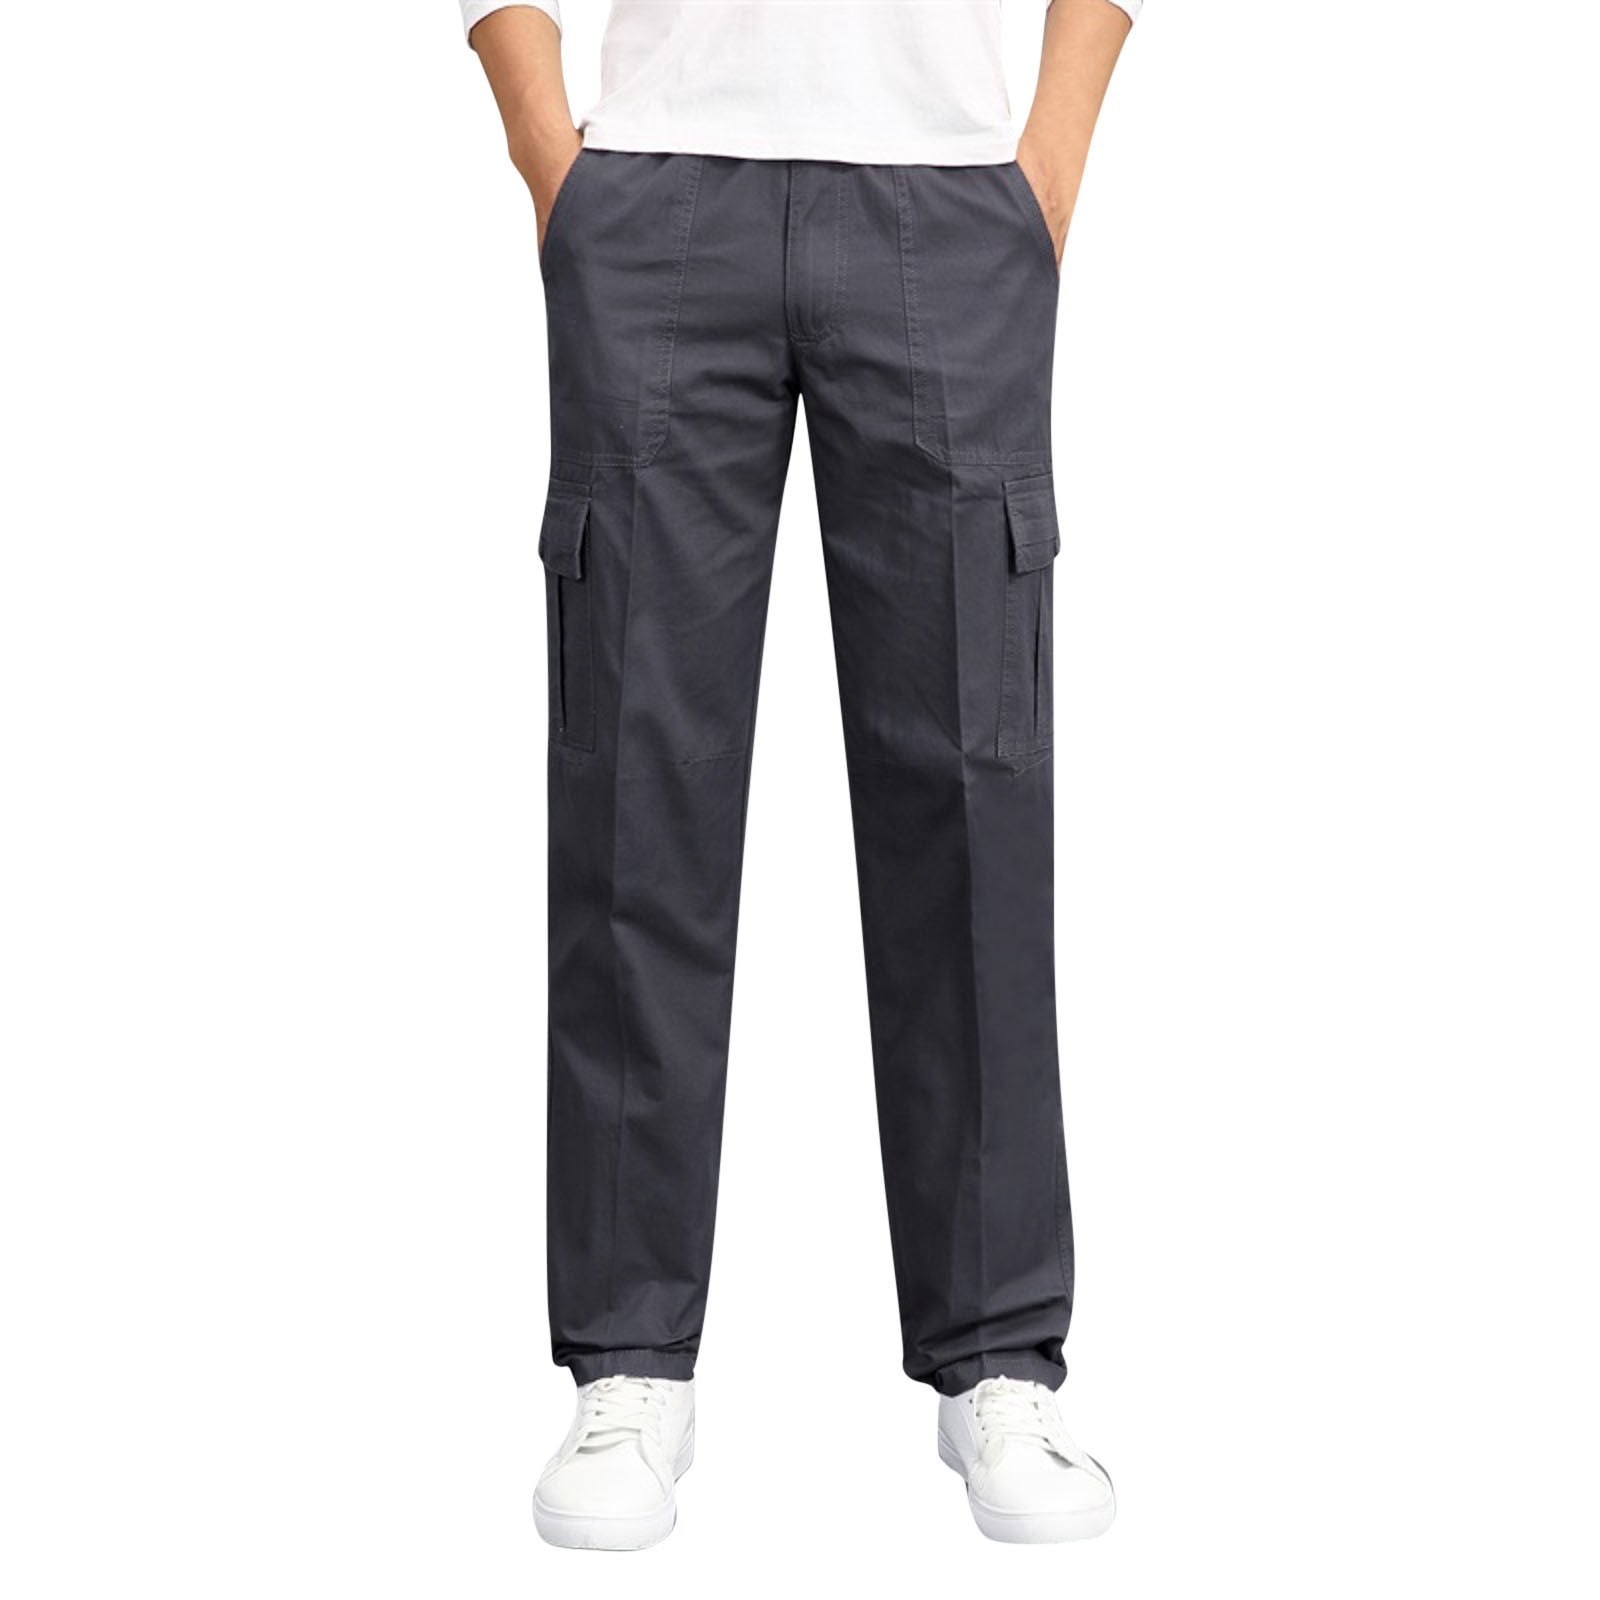 njshnmn Men Plus Size Cargo Trousers Men's Slim Fit Stretch Cargo Jogger  Pants, Grey, L 